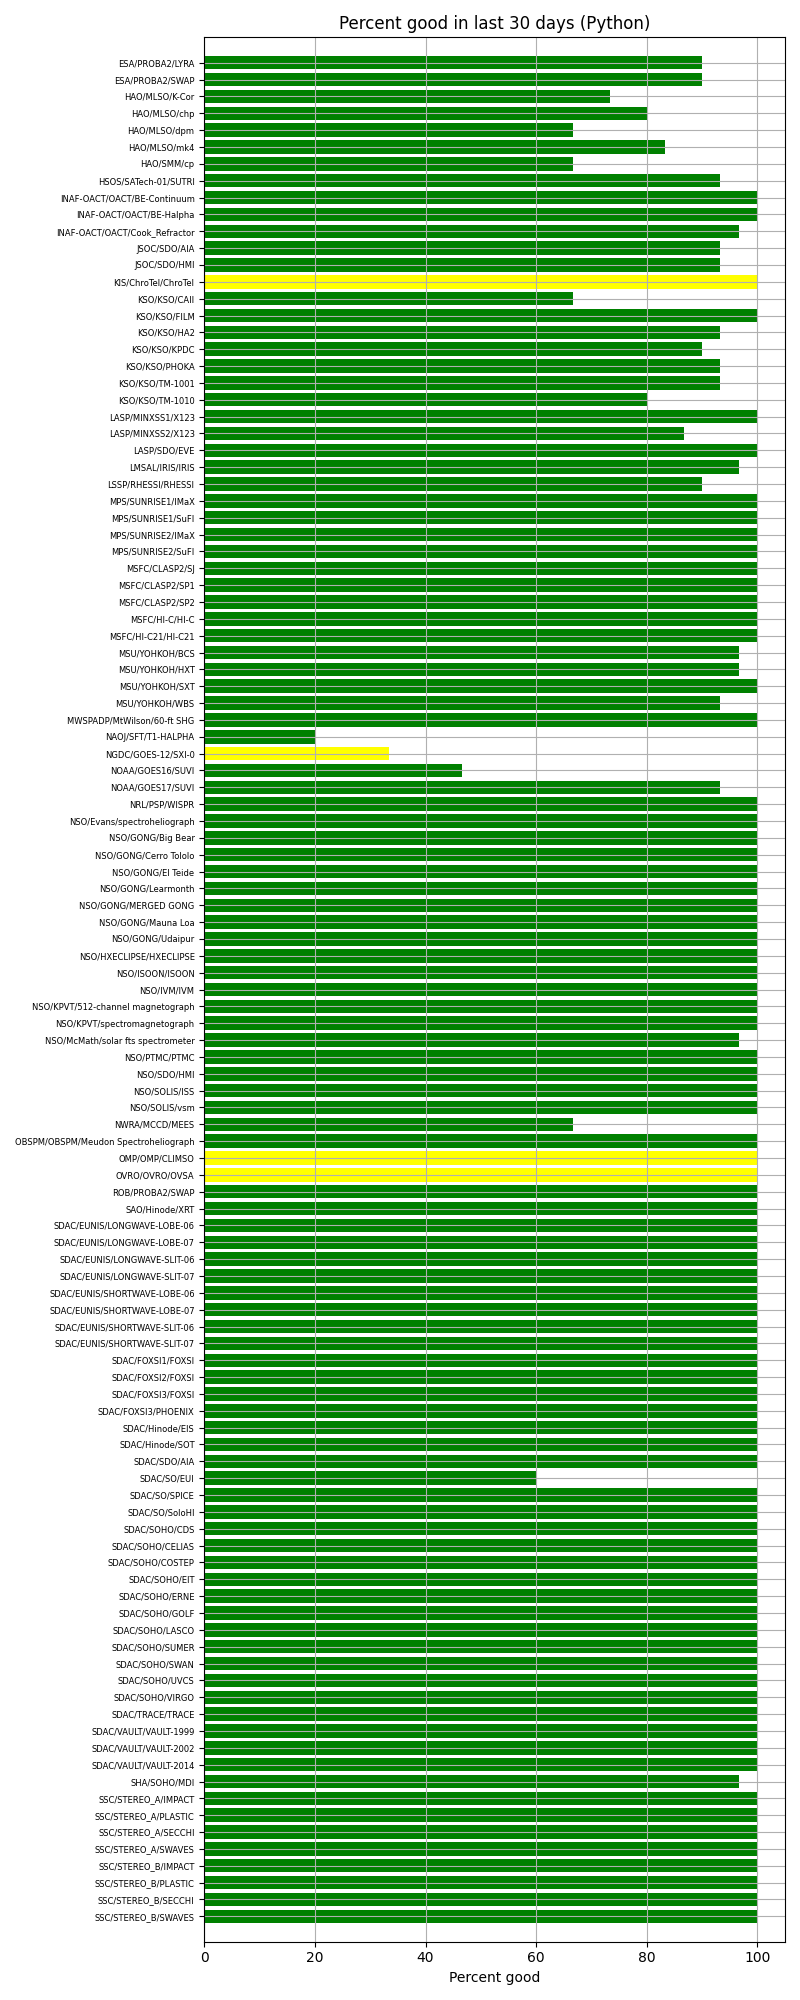 http://vso1.nascom.nasa.gov/vso/health/summary/percent_good_per_source_python.png